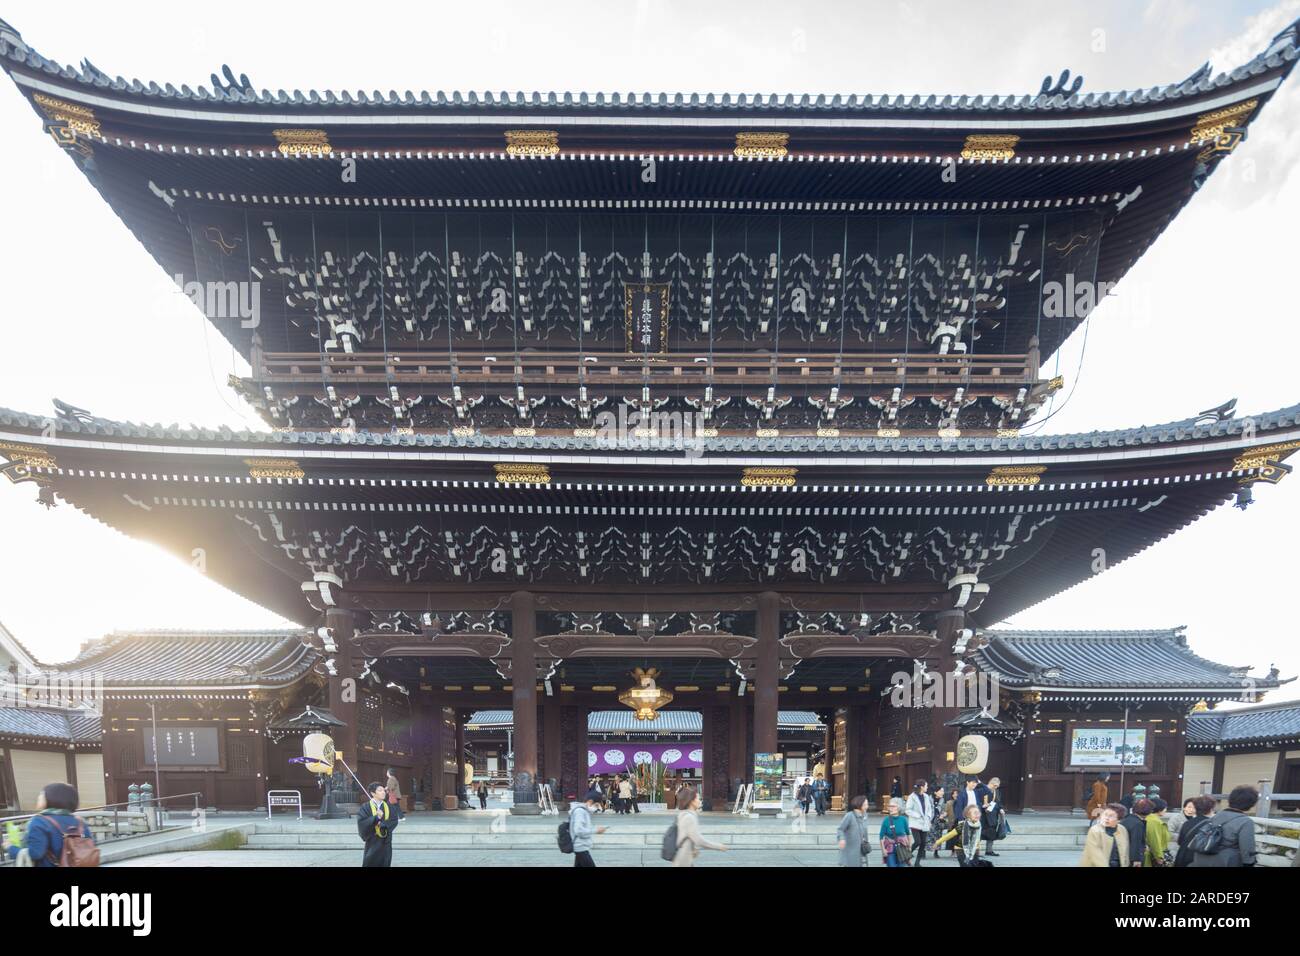 Founder's Hall Gate (Goei-do Mon), erbaut im Jahre 1911, Higashi Honganji Tempel, Kyptp, Japan Stockfoto